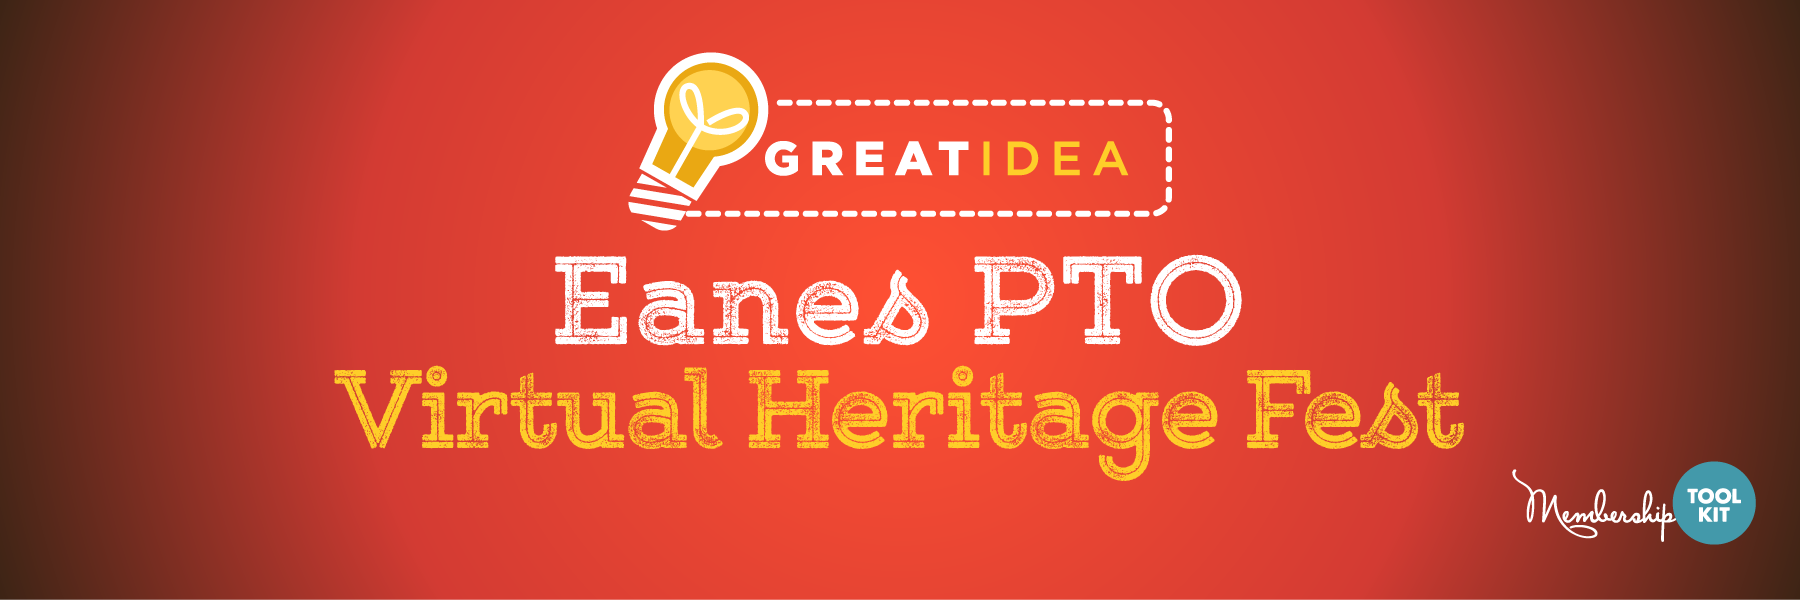 Eanes PTO plans a Virtual Heritage Festival